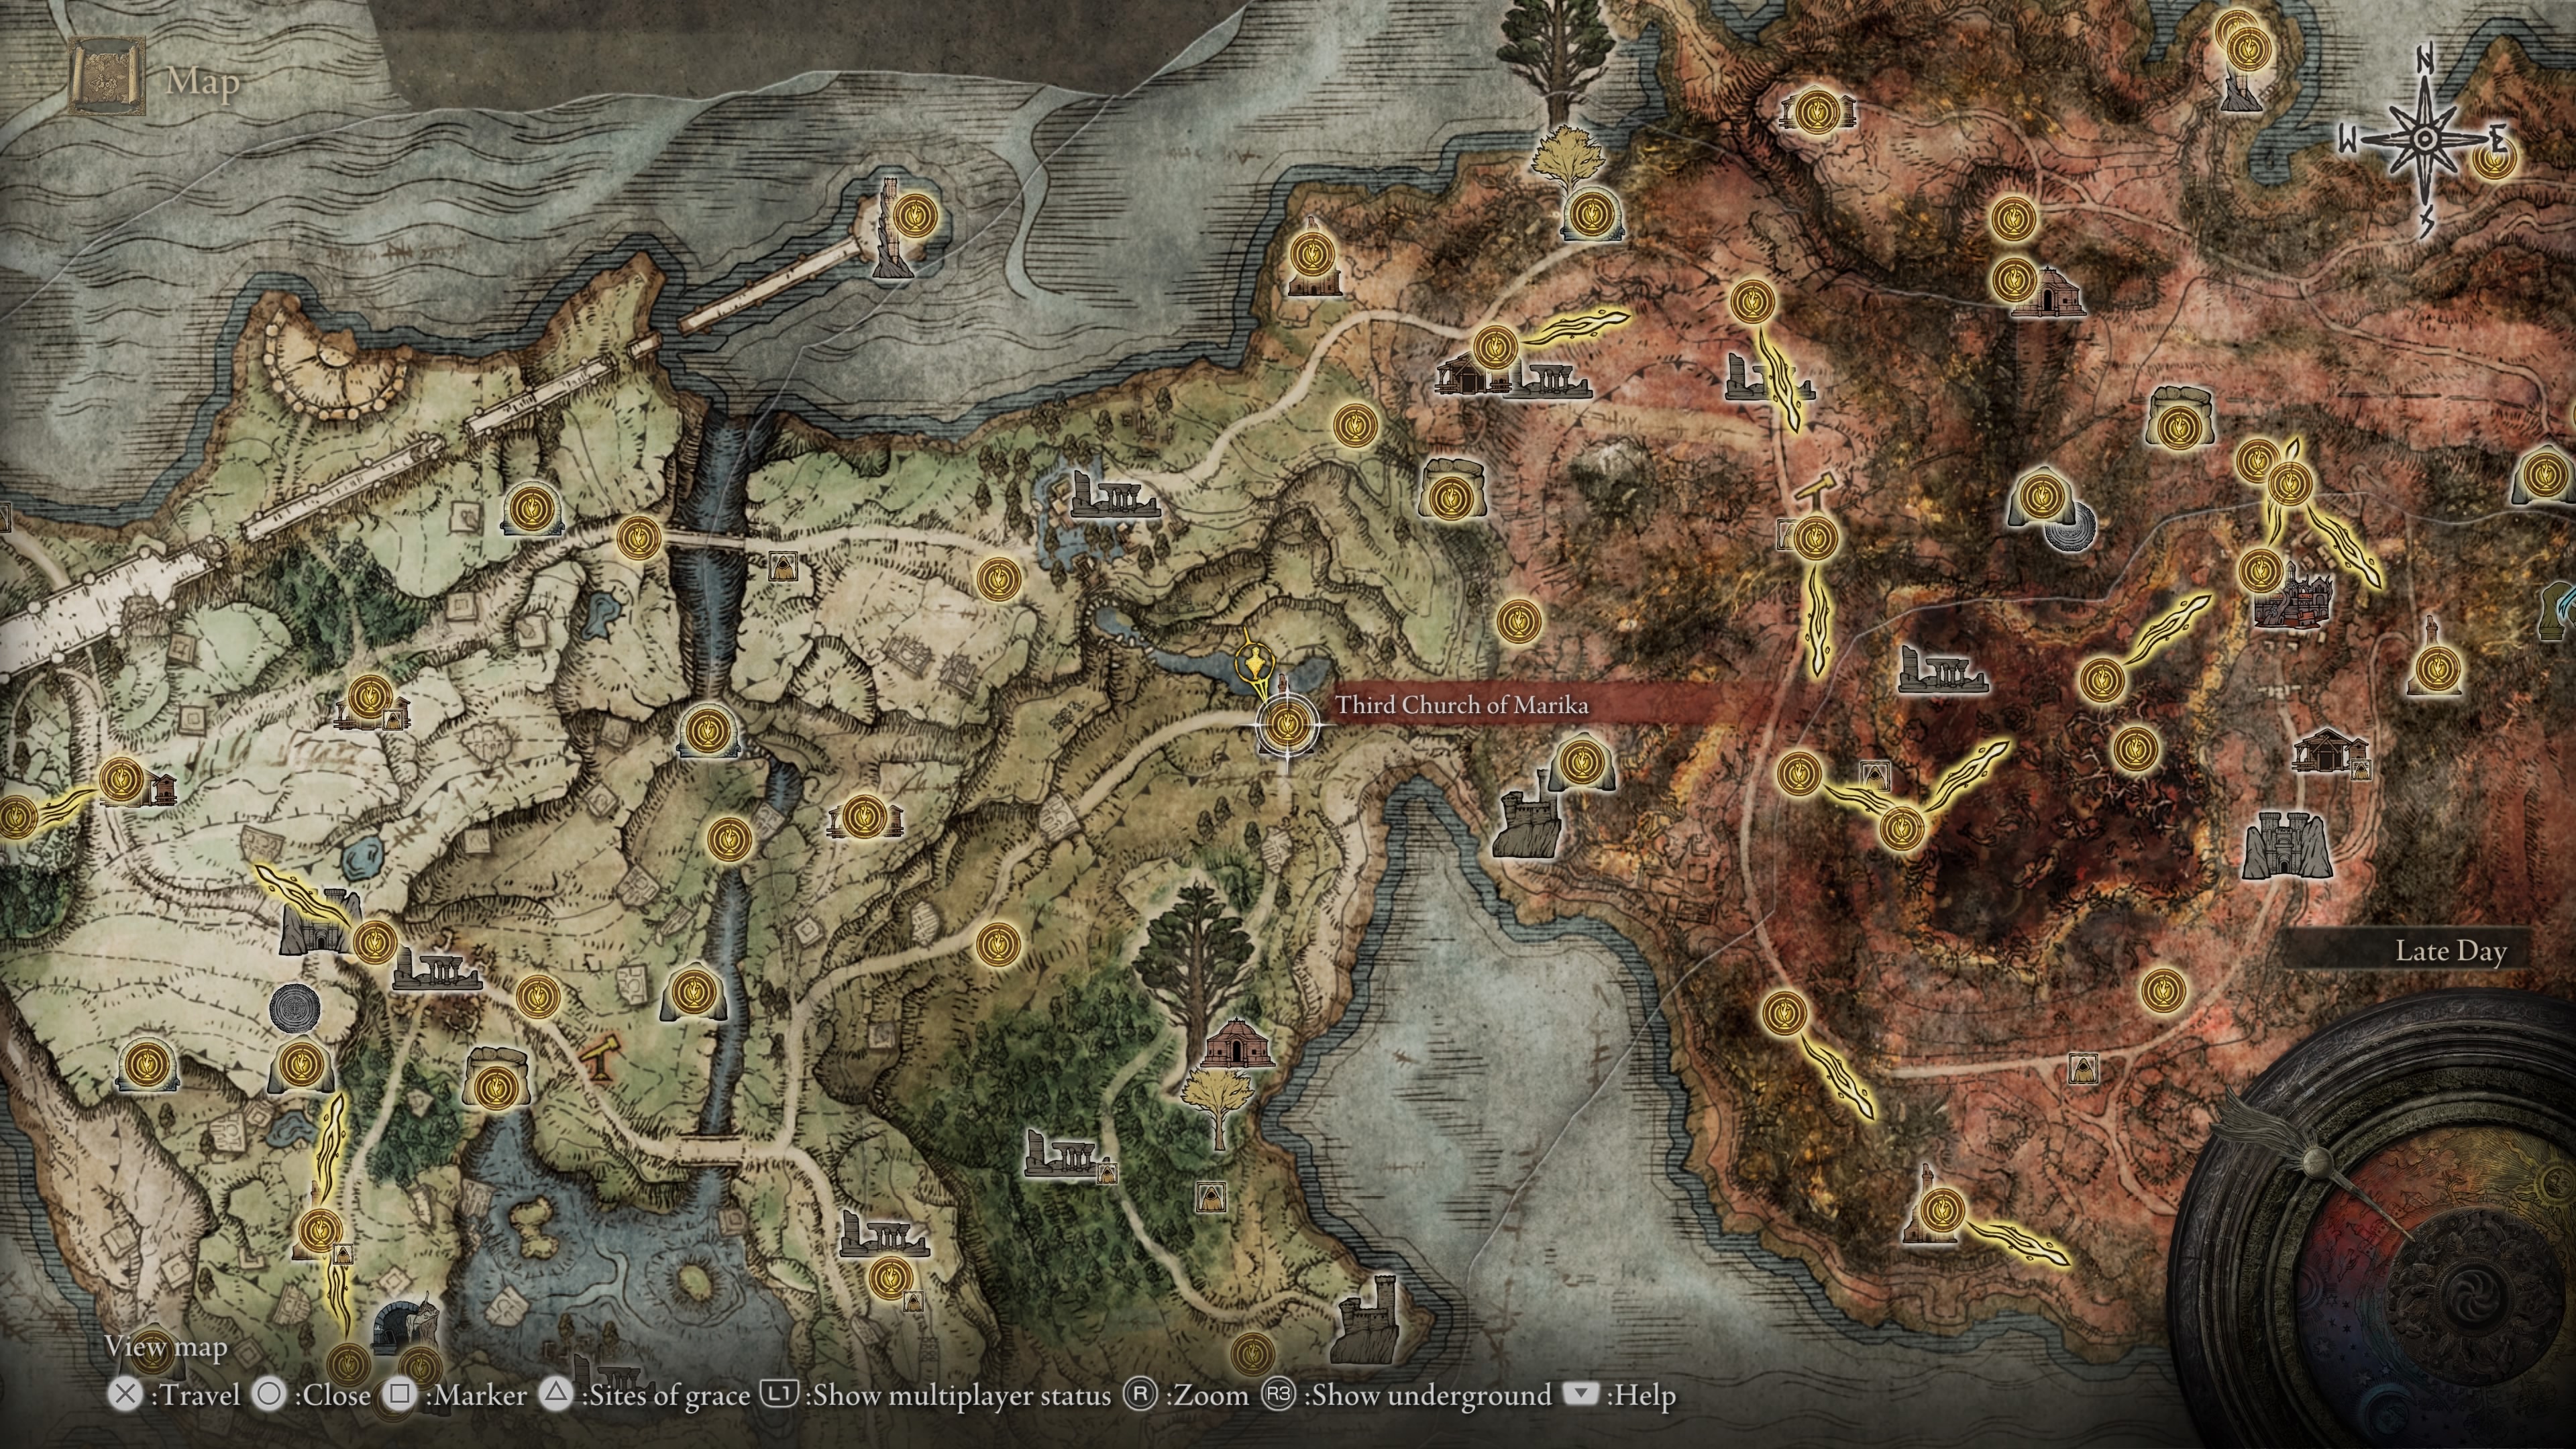 Elden Ring Academy of Raya Lucaria walkthrough and map - Polygon